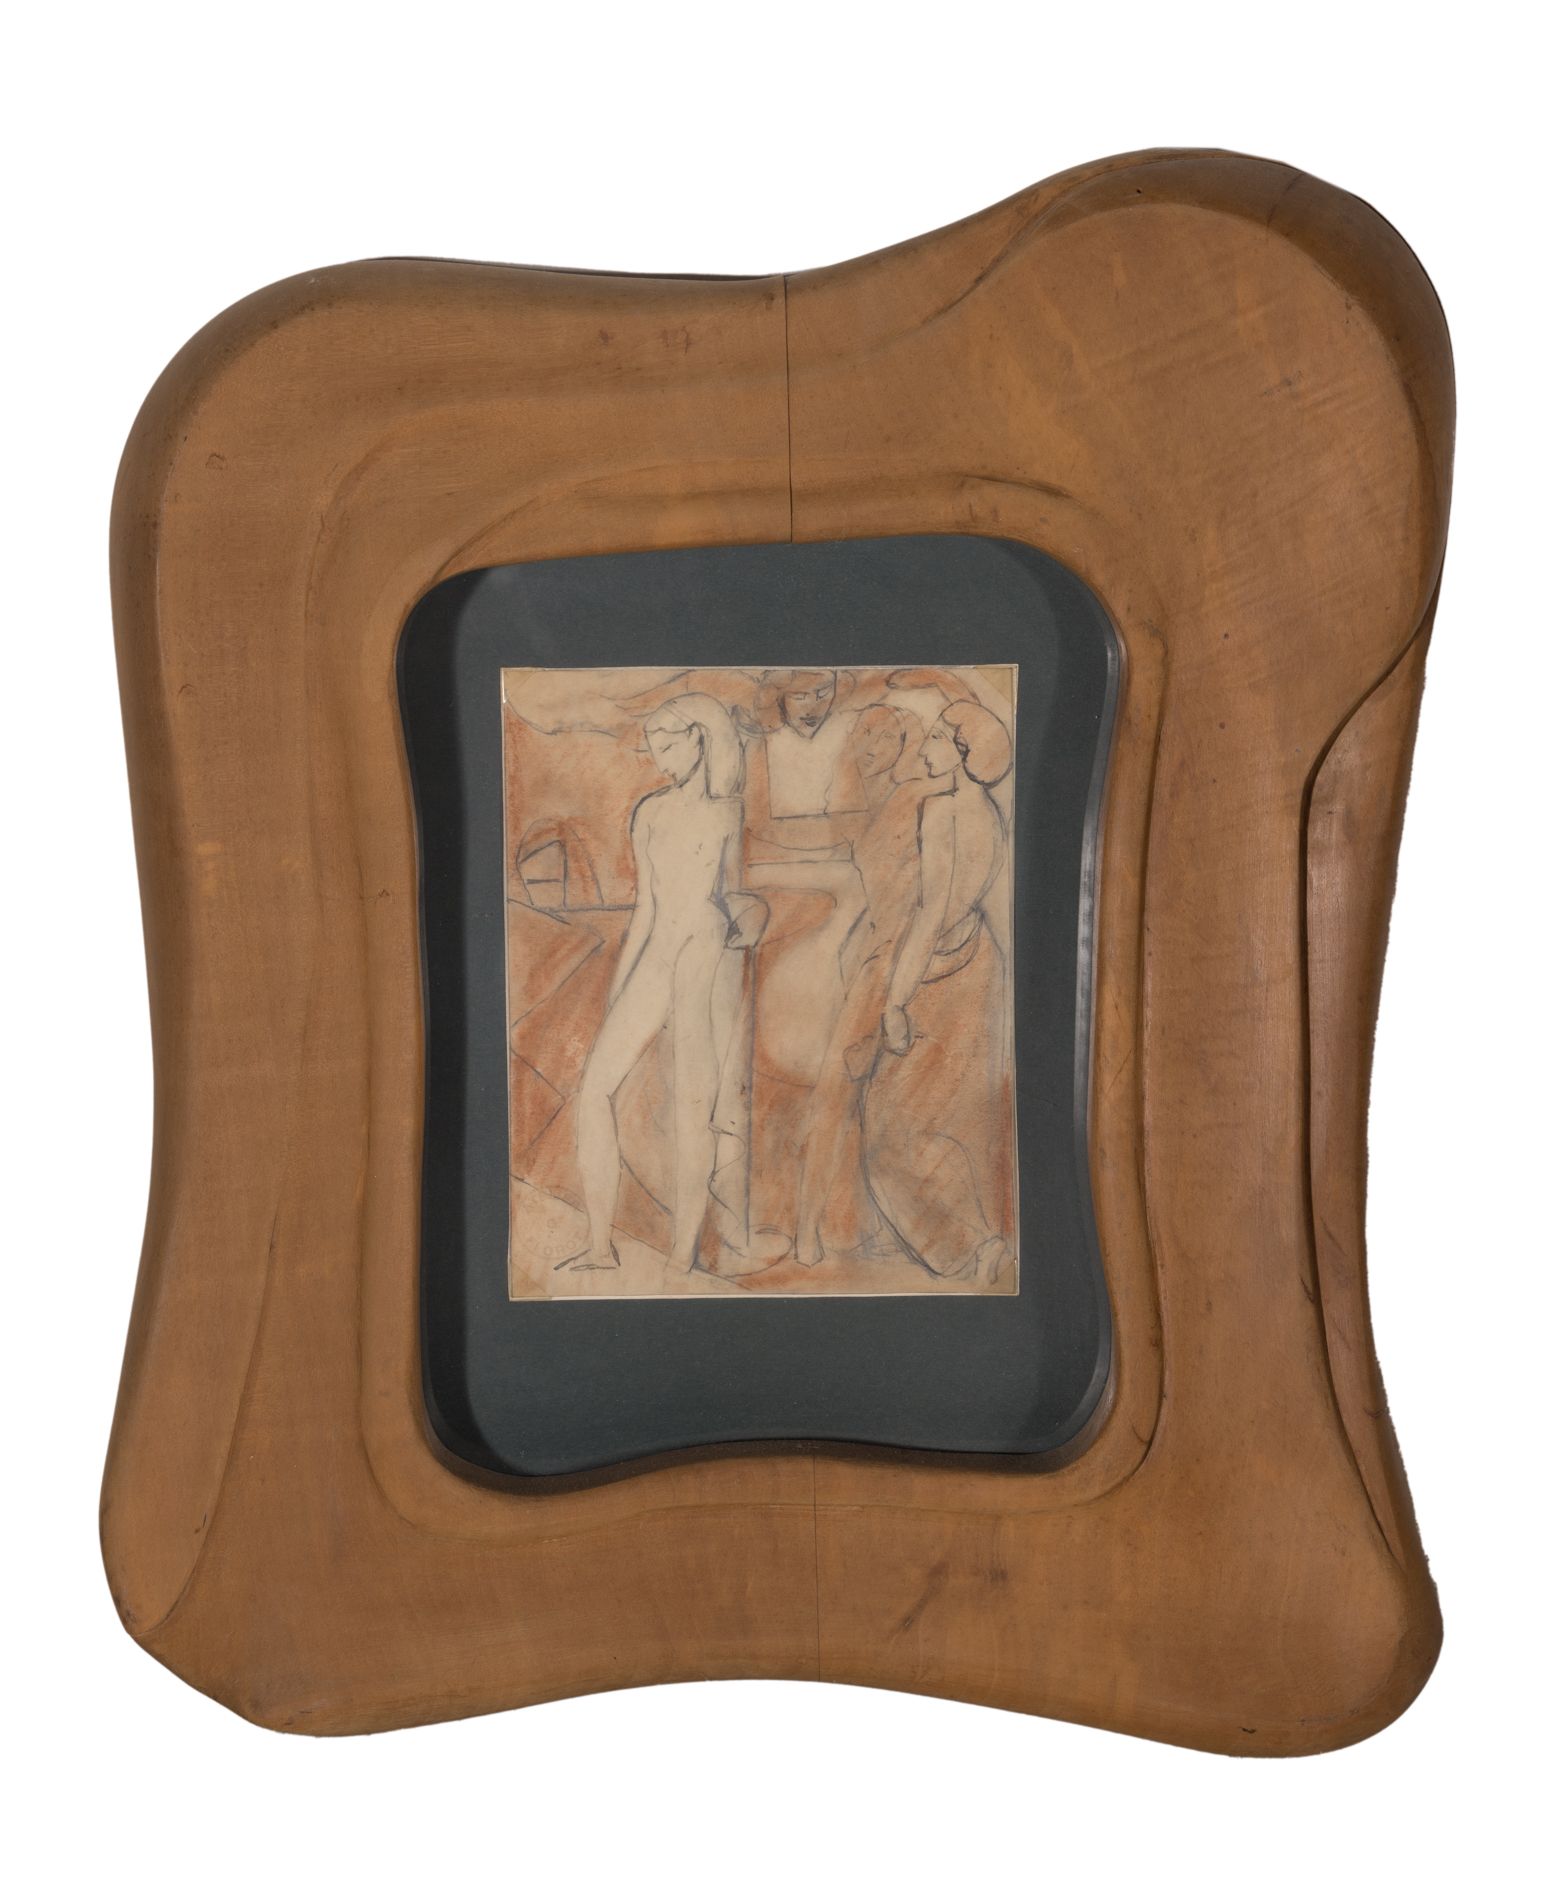 Null Gustave FLOROT (1885-1965)
Desnudos femeninos 
Tinta y acuarela sobre papel&hellip;